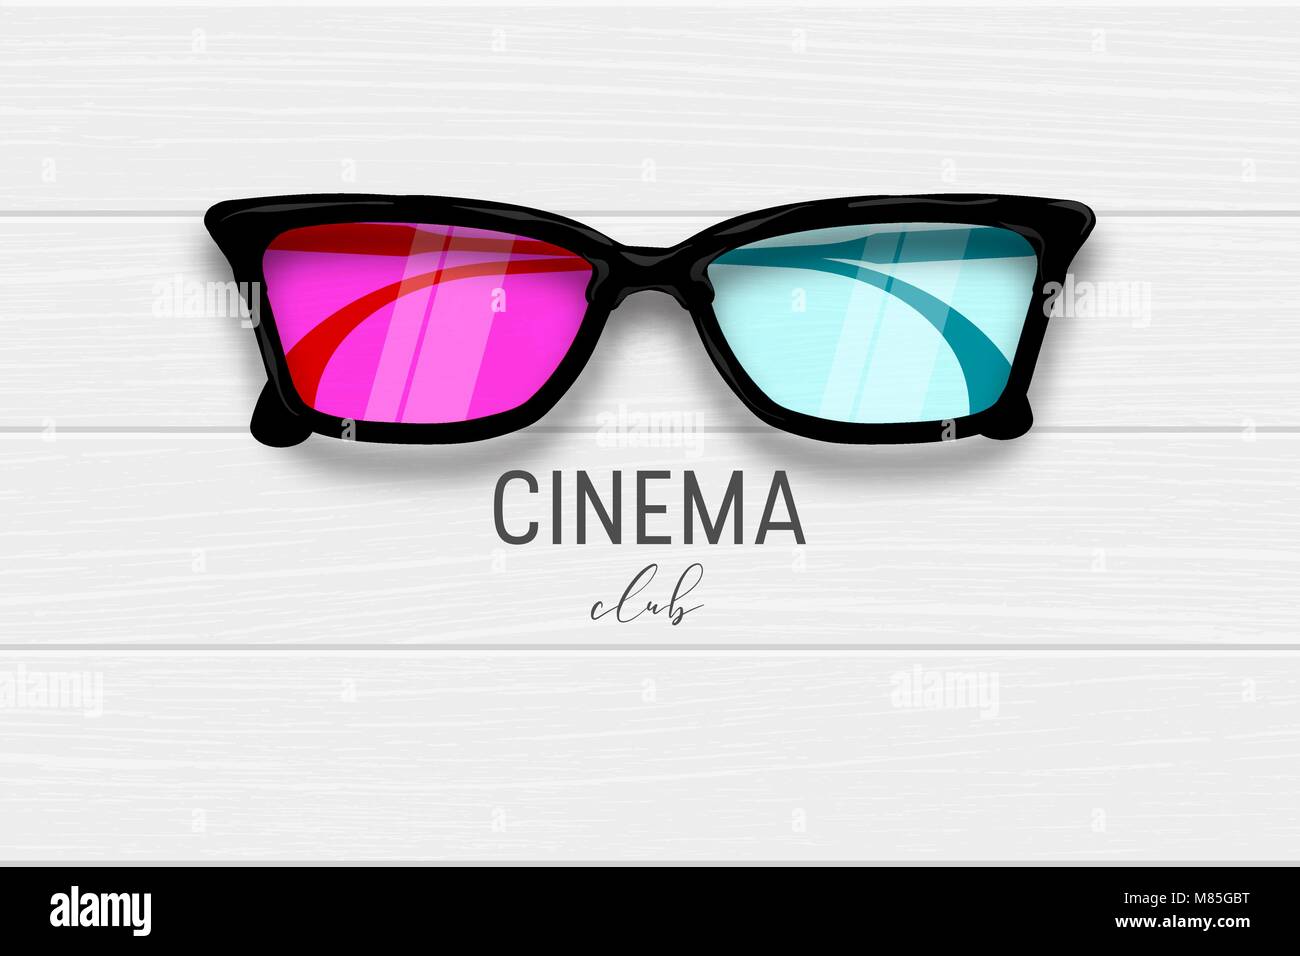 Cinema 3d glasses wooden banner Stock Vector